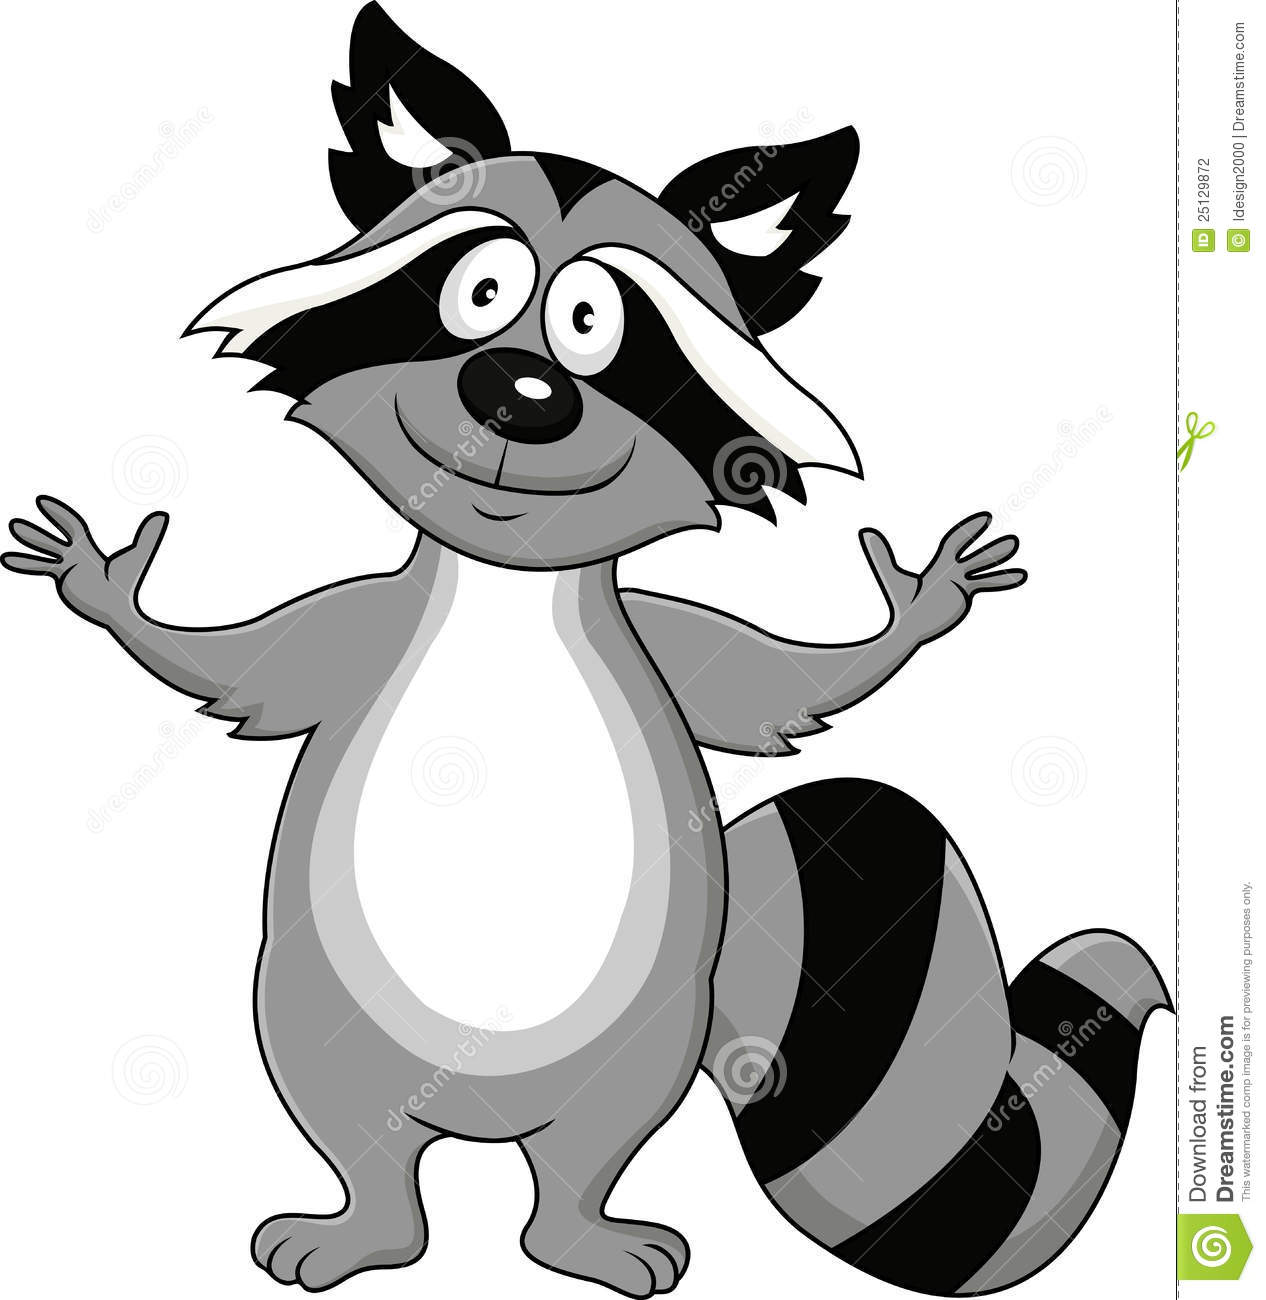 Racoon clipart raccoon. Cartoon panda free images